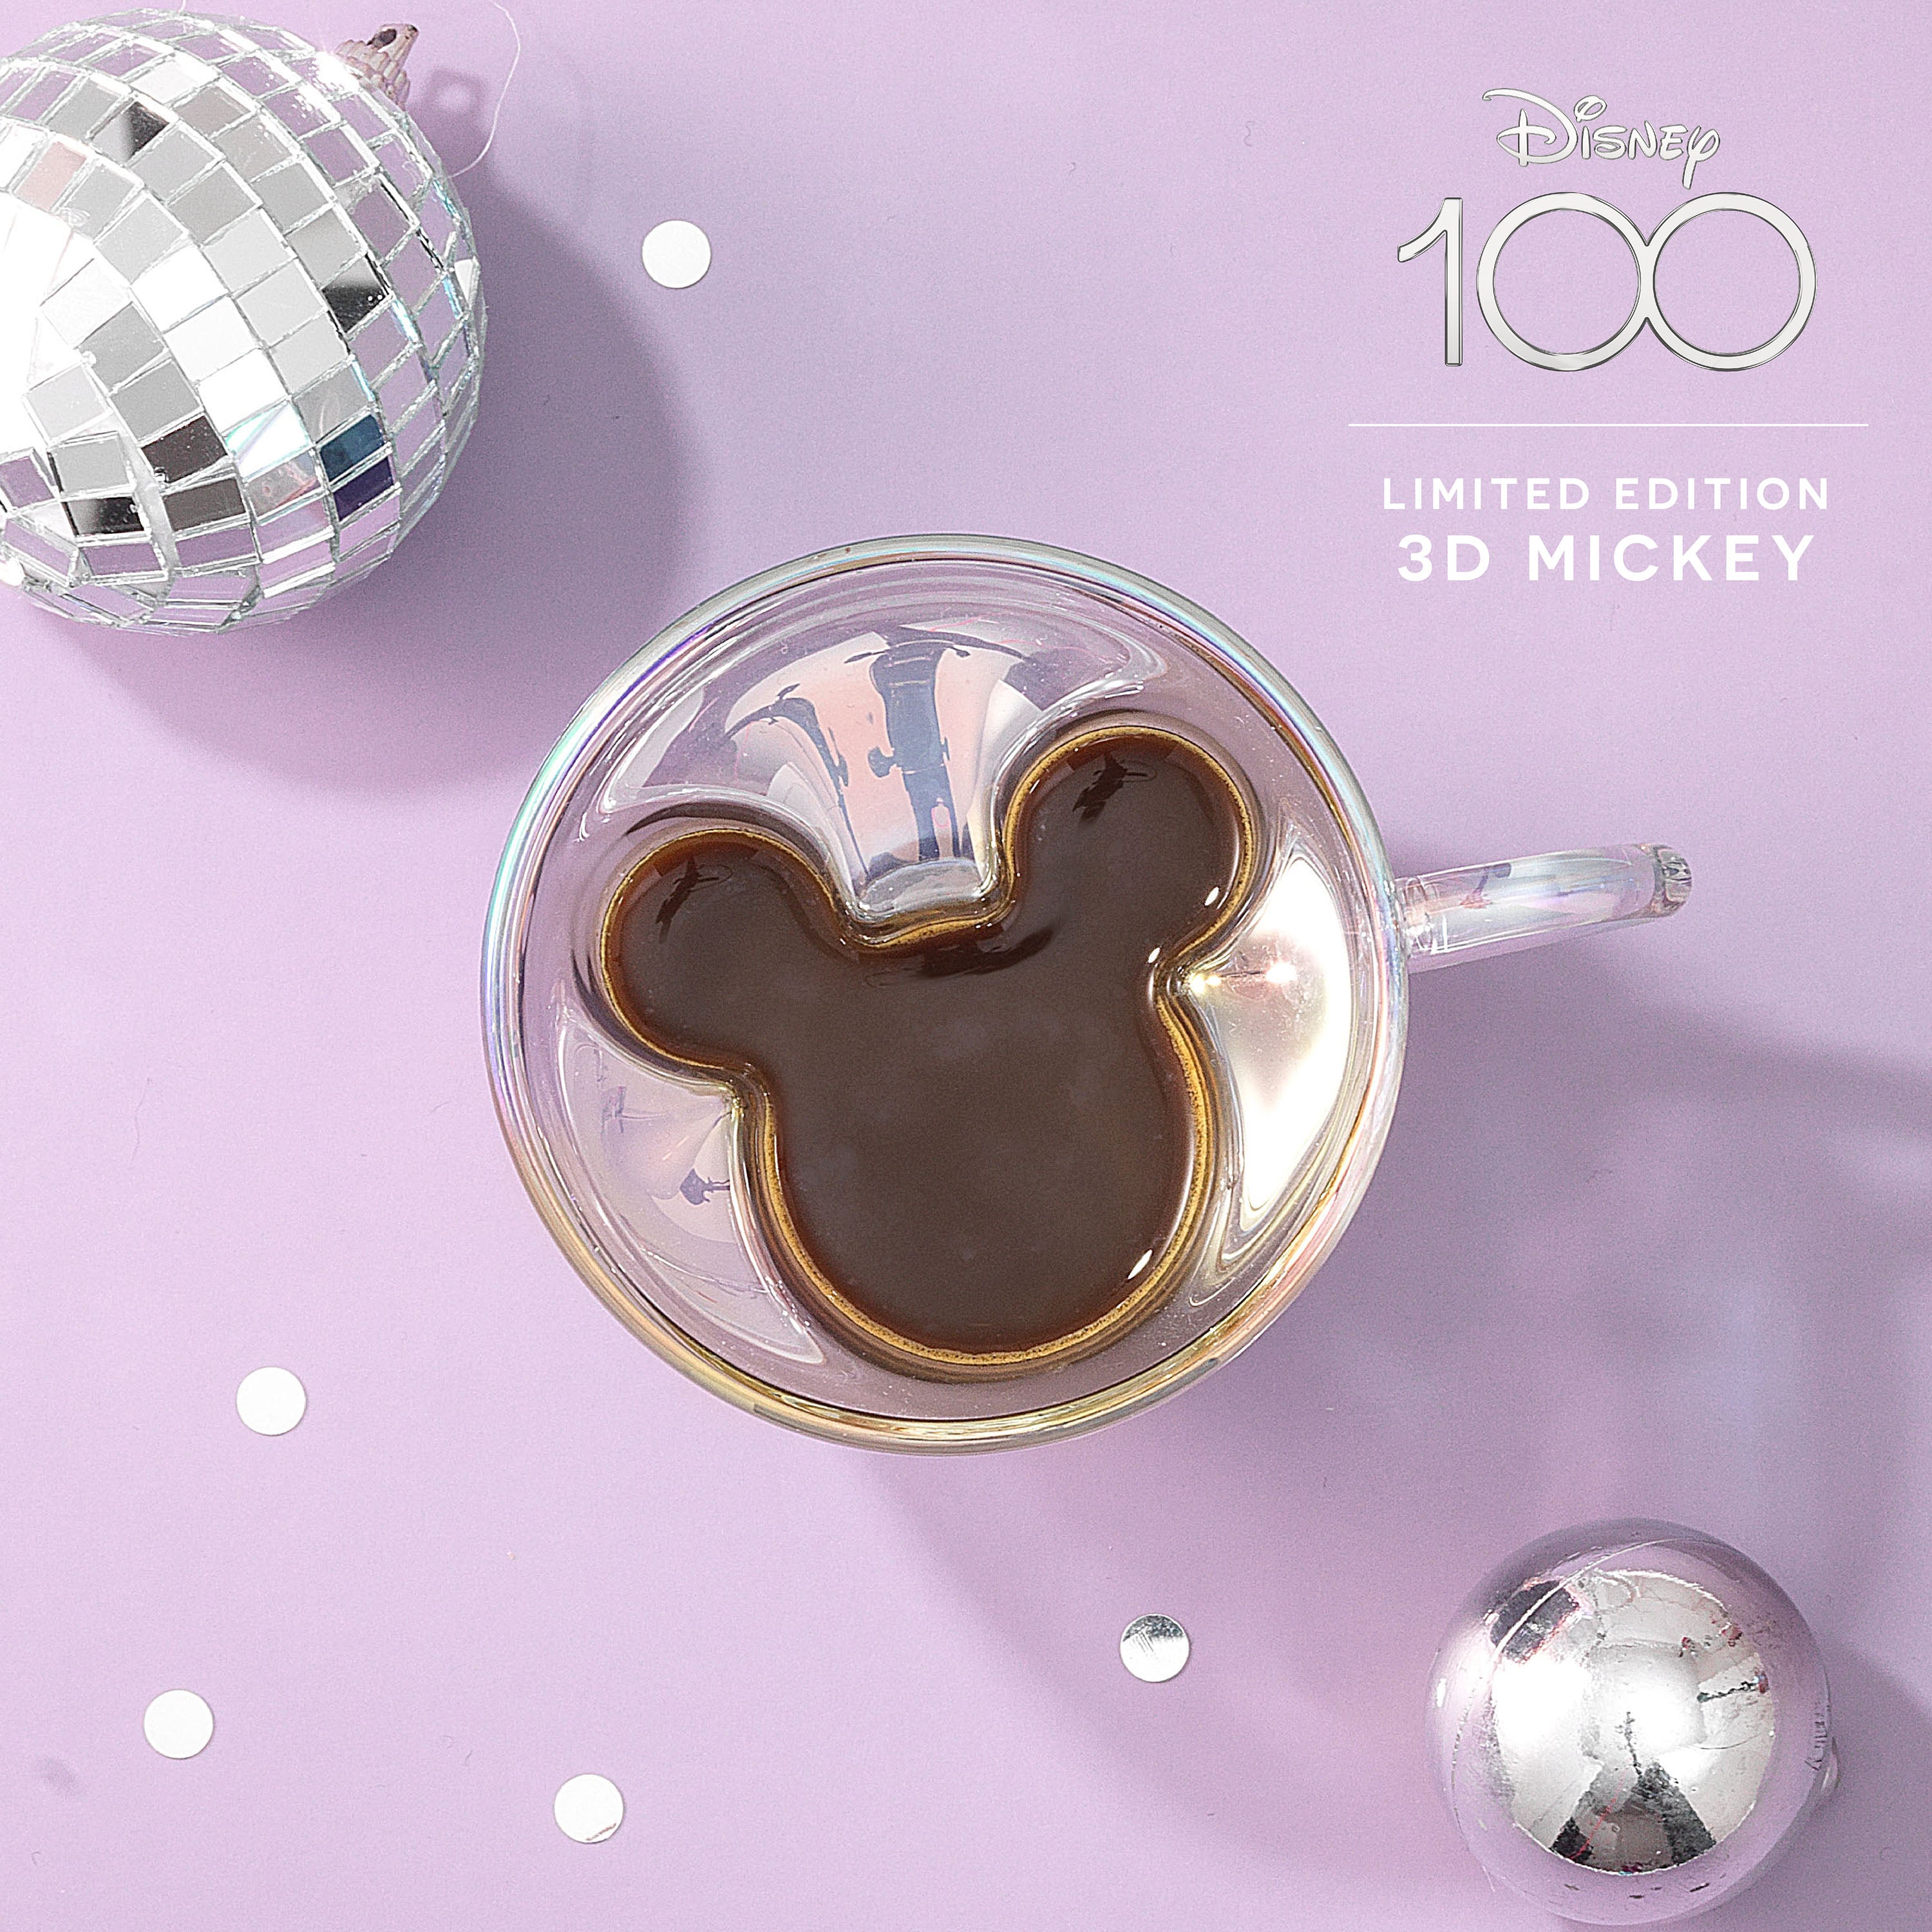 Disney100 5.4oz 3D Mickey Double Wall Espresso